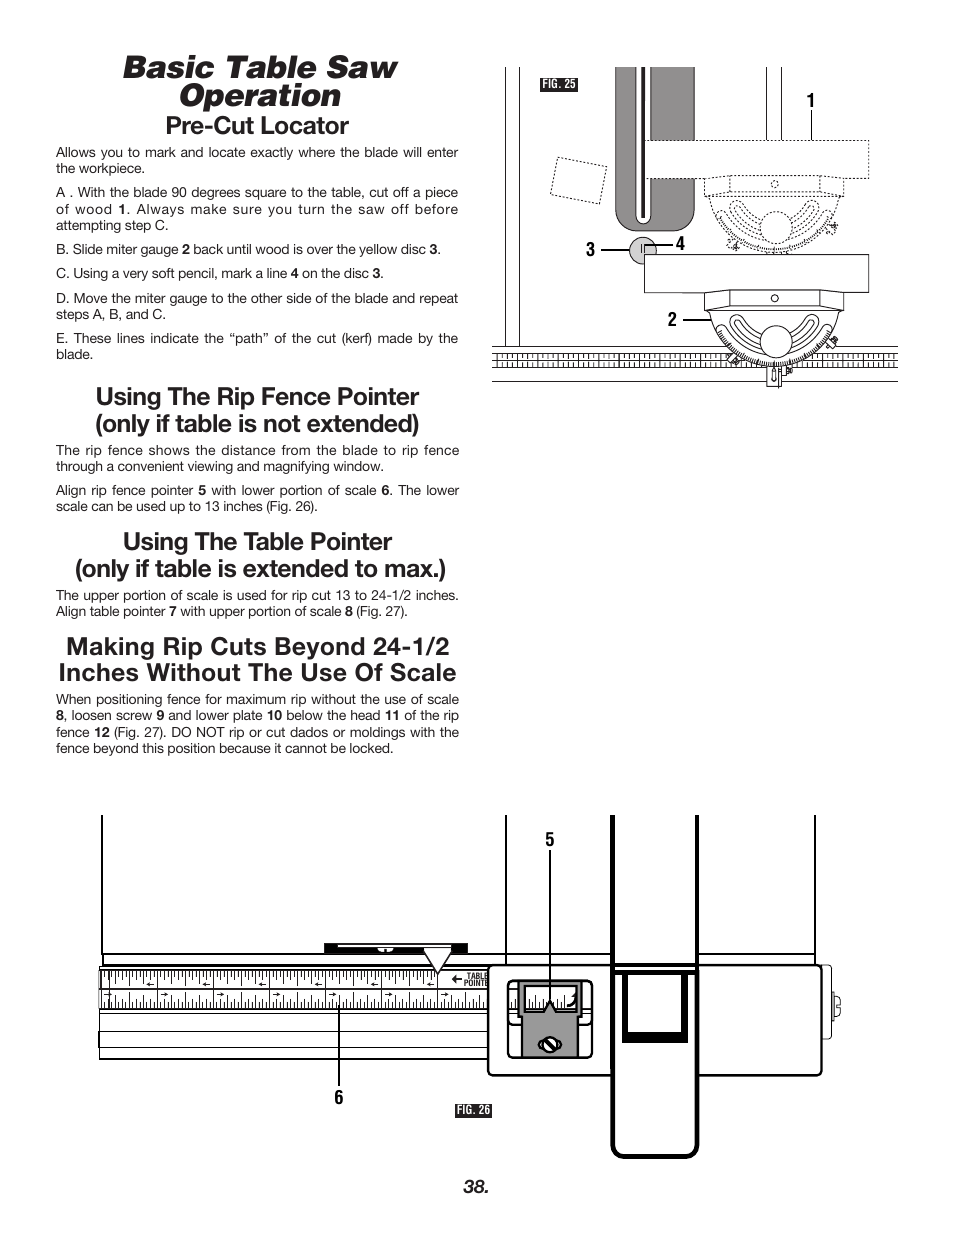 Basic table saw operation, Pre-cut locator | Bosch 4000 User Manual